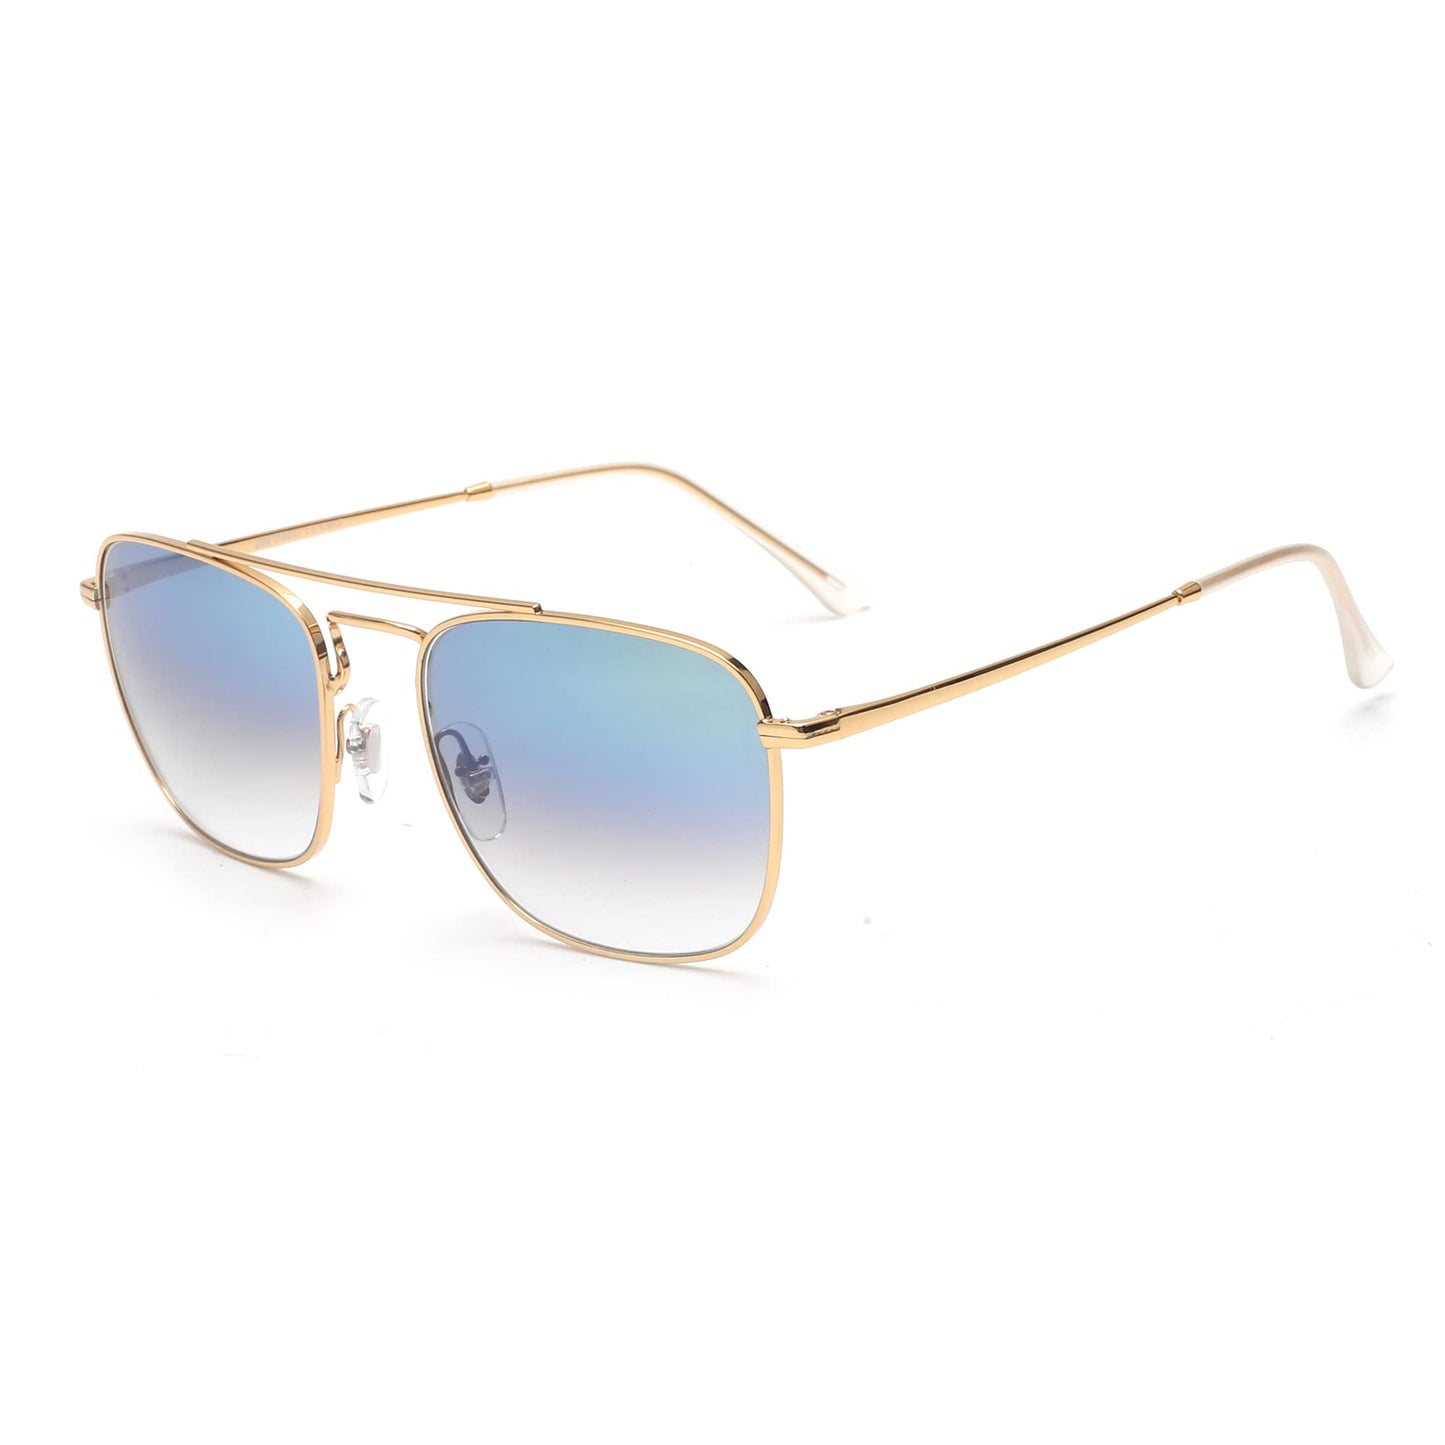 JIM HALO Retro Square Aviator Sunglasses Premium Glass Lens Flat Metal Eyewear Men Women (Gold/Gradient Blue)